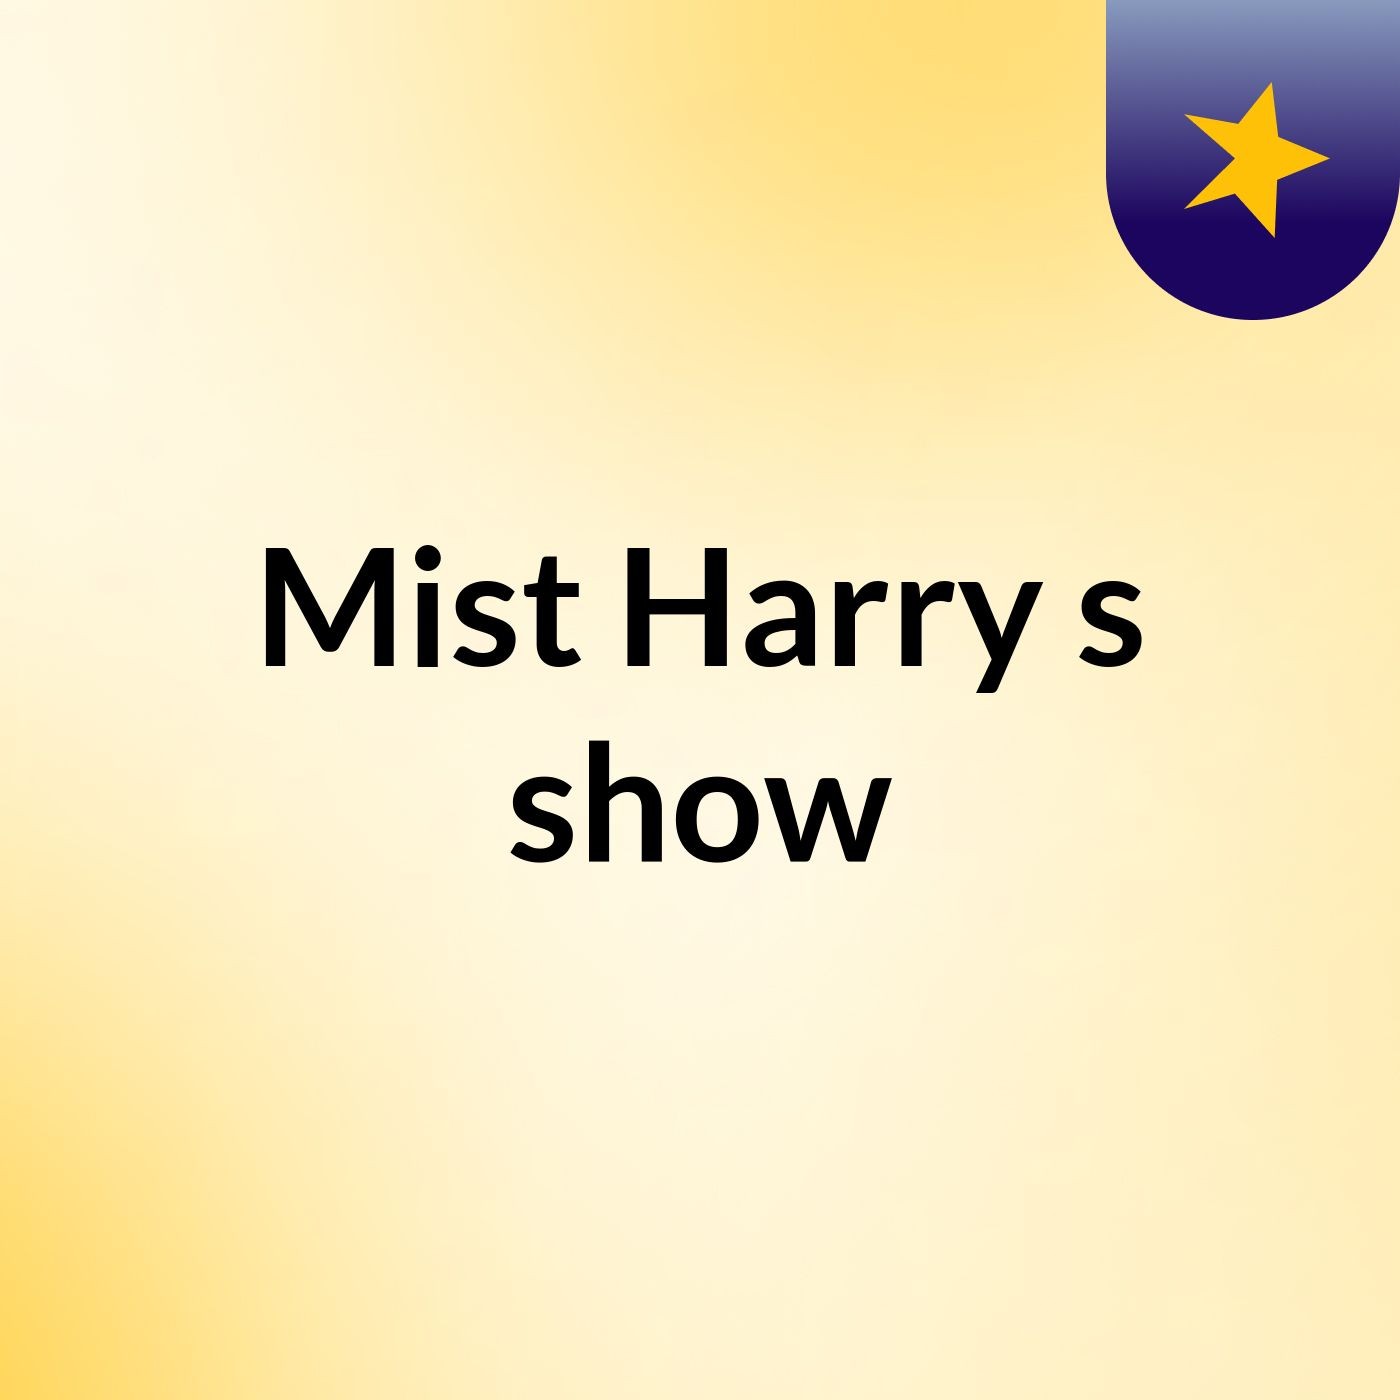 Mist Harry's show